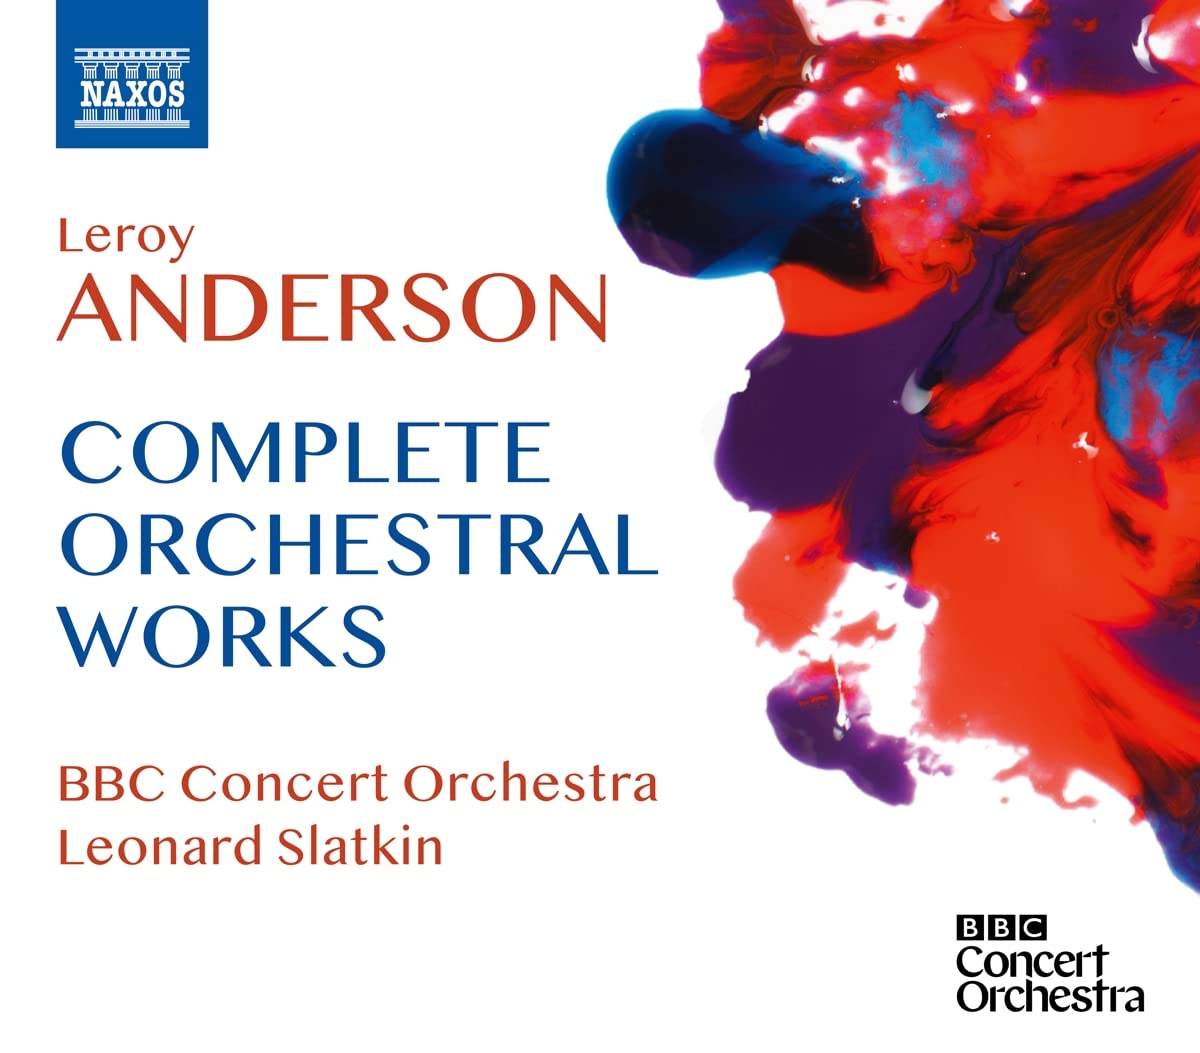 Bbc Concert Orchestra / Leonard Slatkin - Leroy Anderson: Complete Orchestral Works